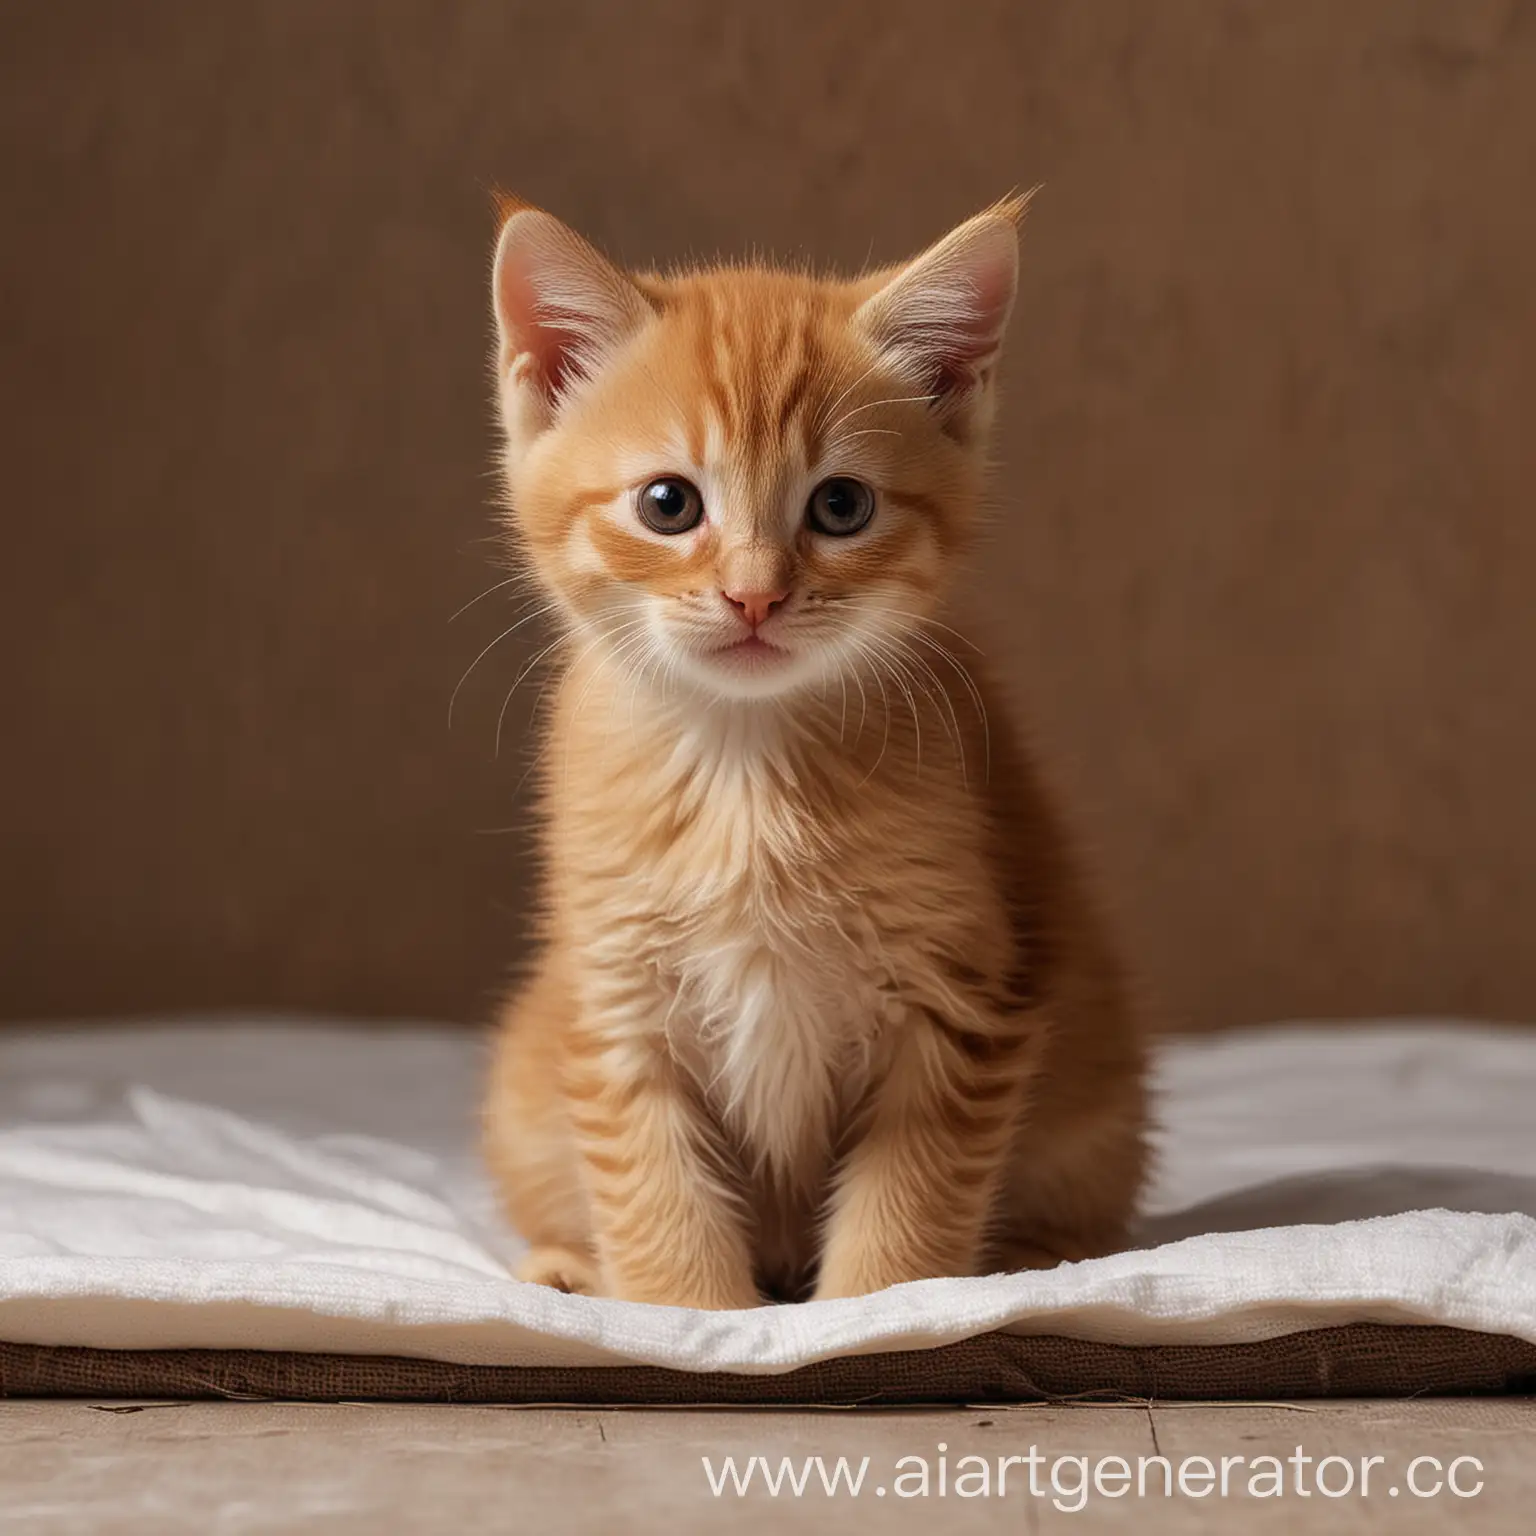 Adorable-Ginger-Kitten-Sitting-on-White-Blanket-Against-Dark-Evening-Sky-and-Brown-Wall